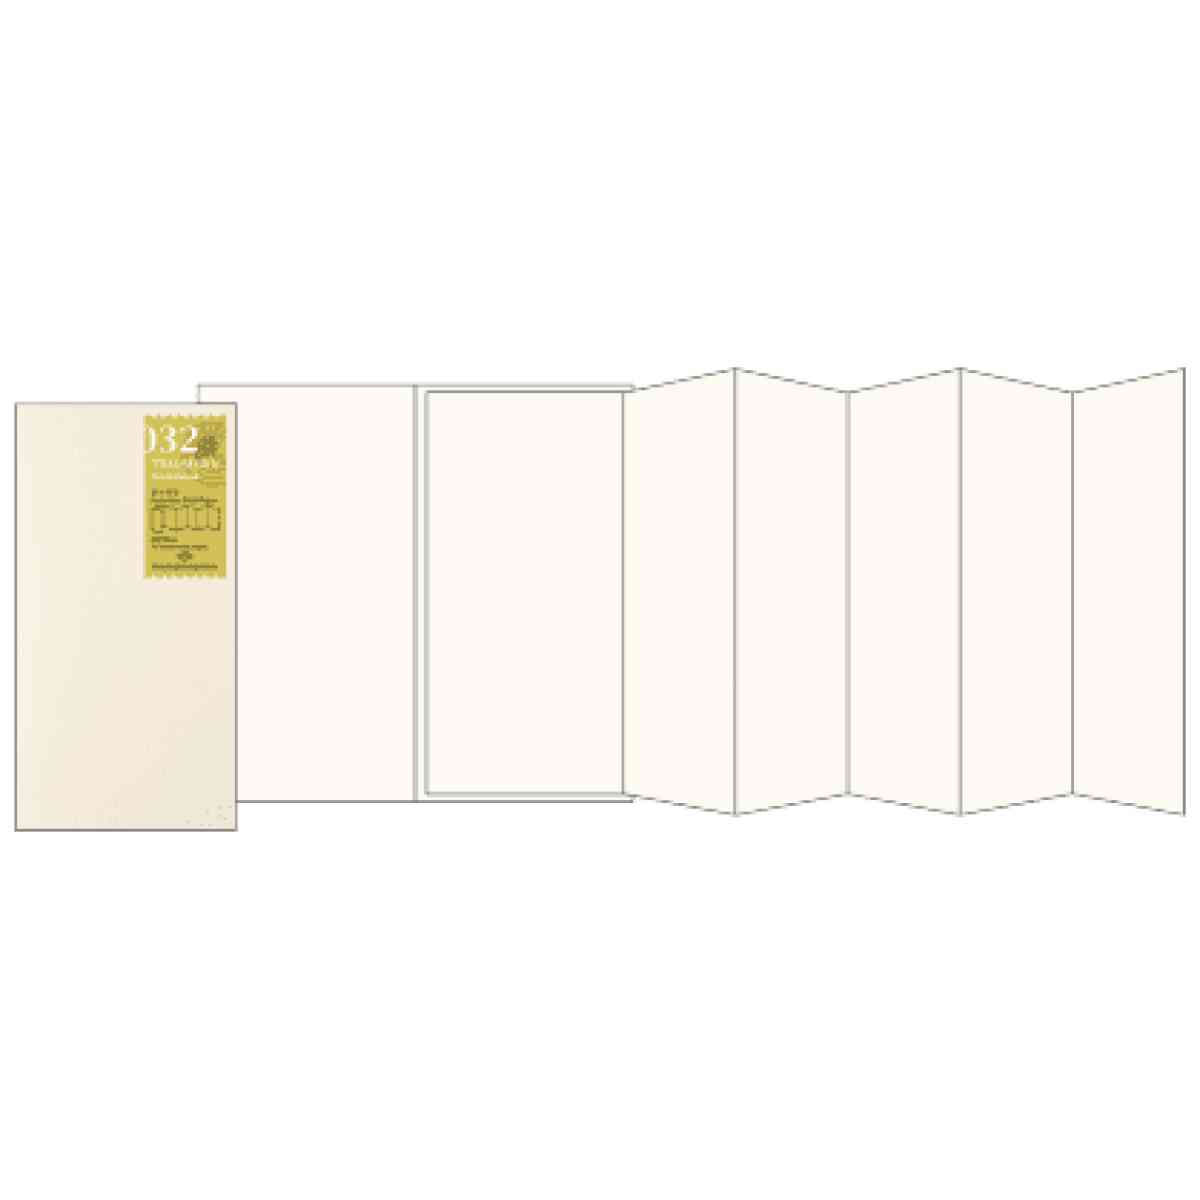 TRC Accordion Fold Paper Refill 032